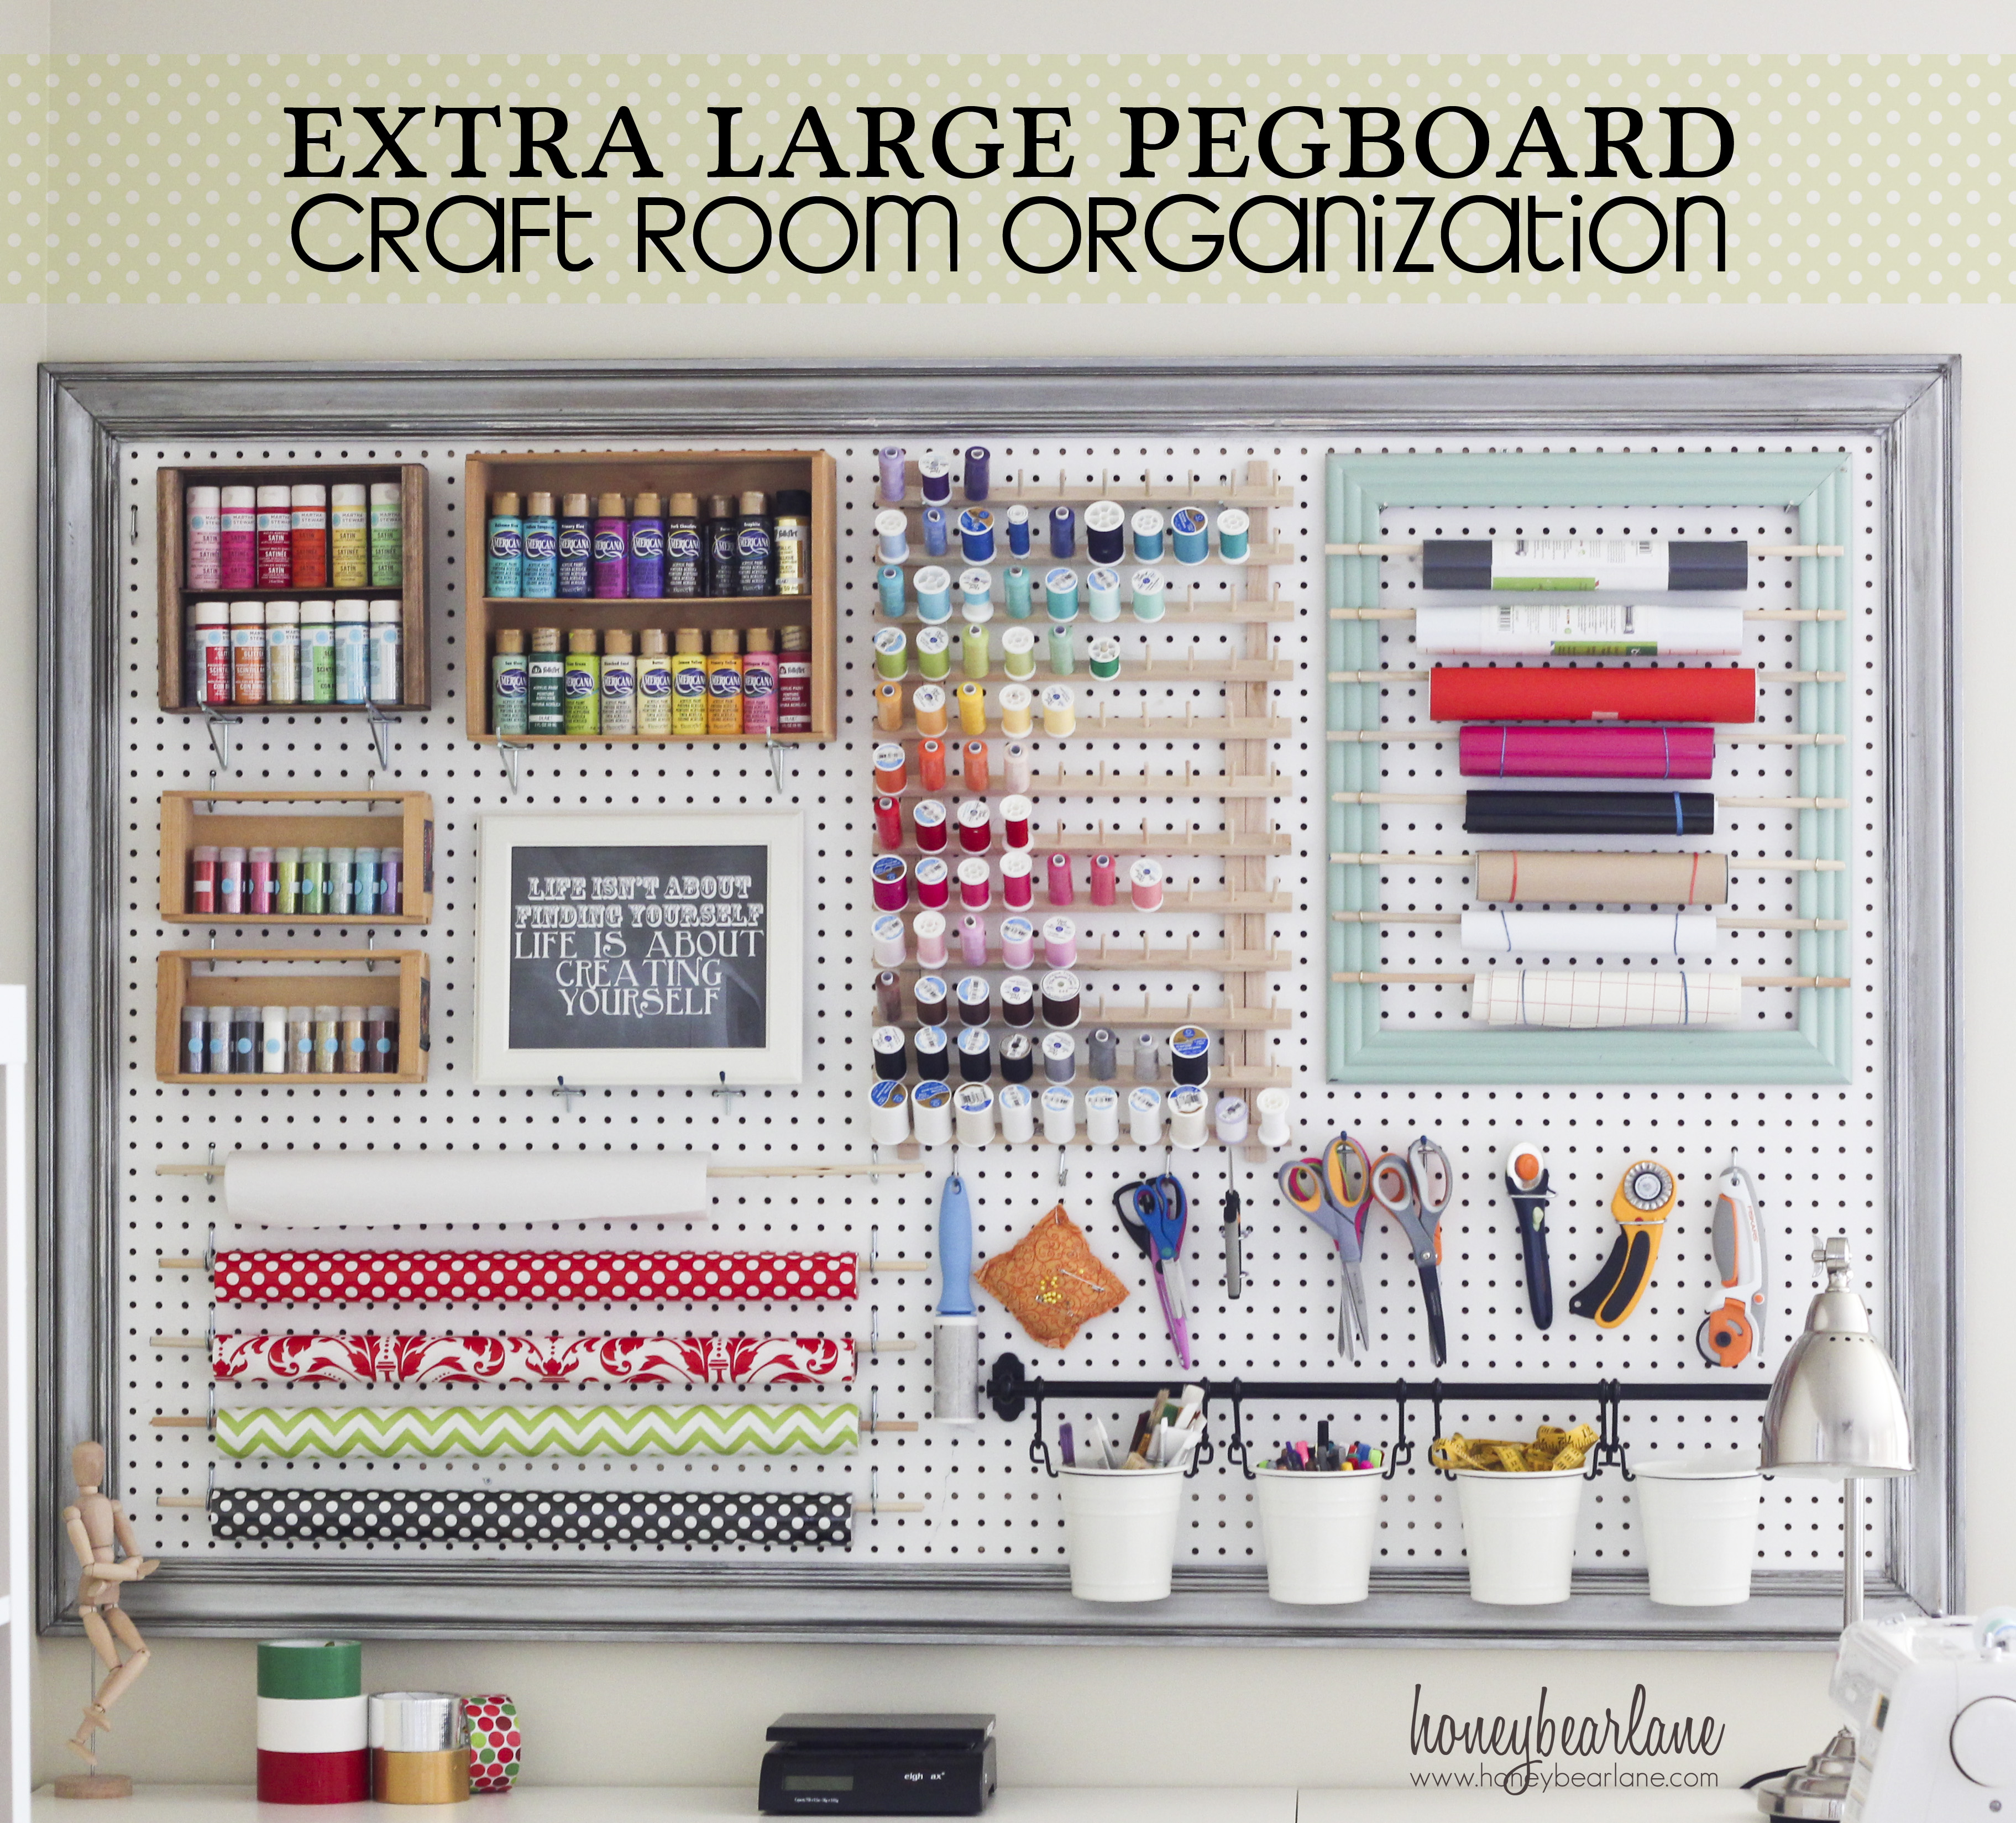 Pegboard Craft Room Organization Idea